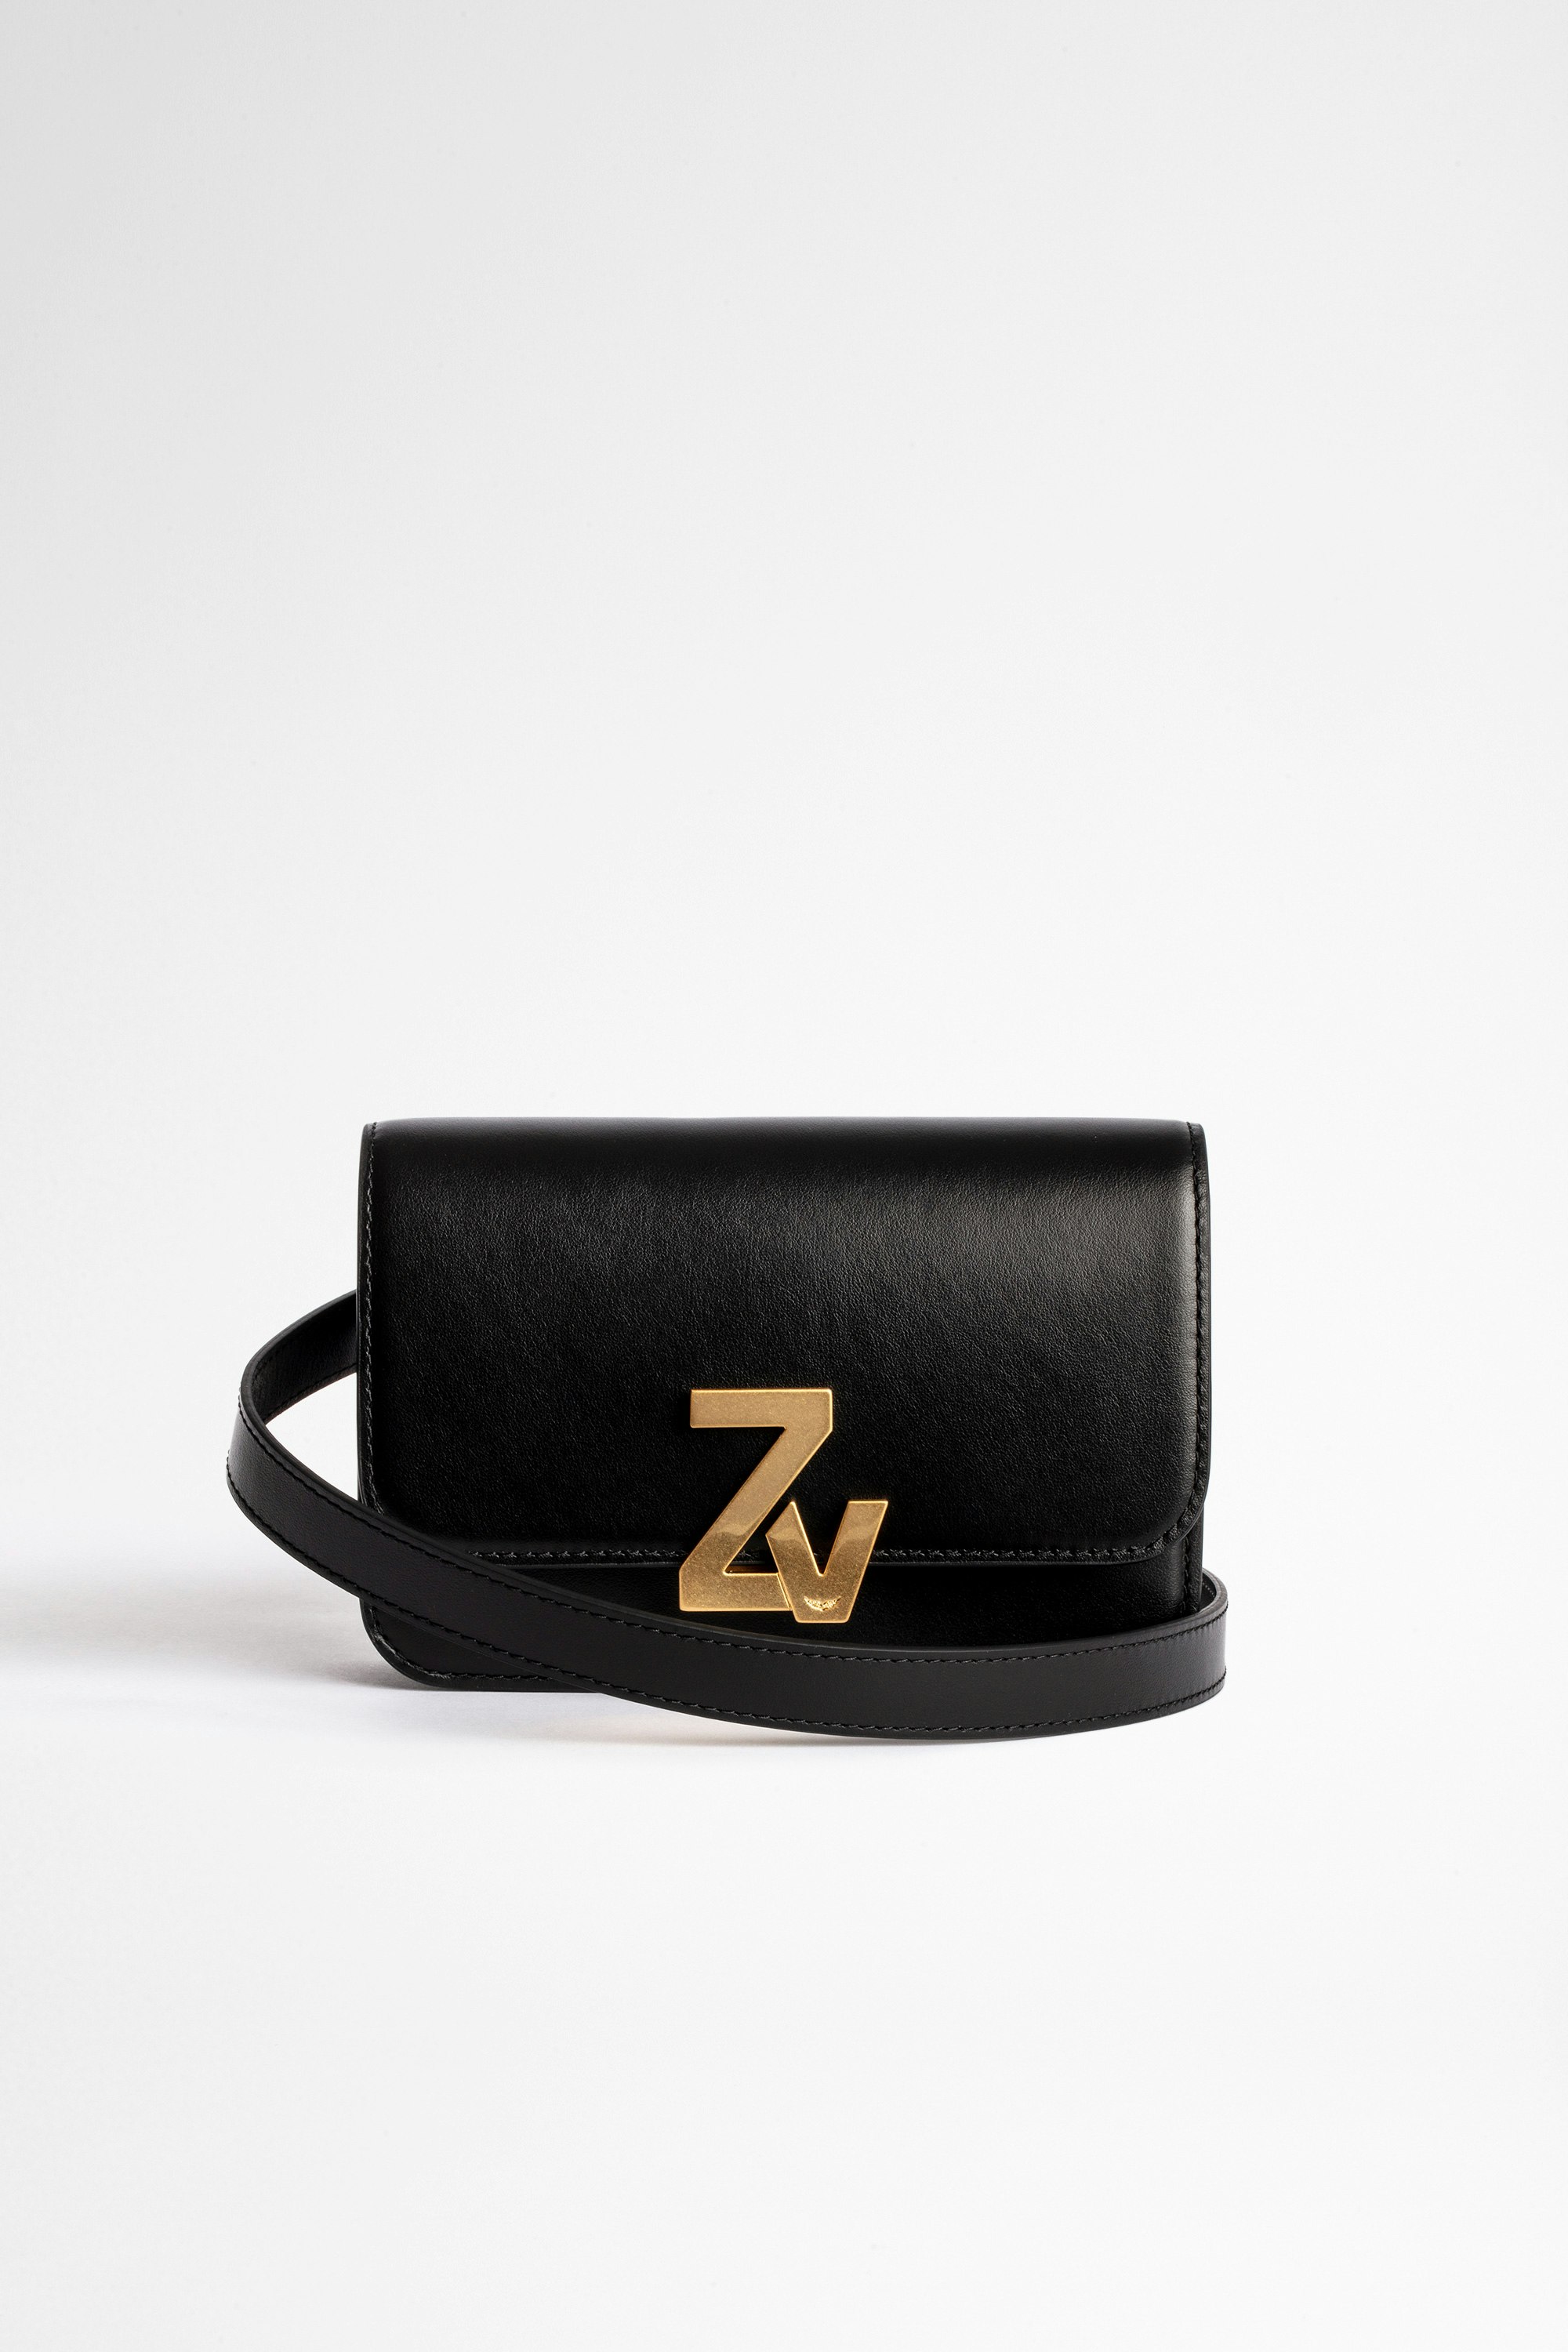 Tasche mit ZV Initiale Le Belt Bag